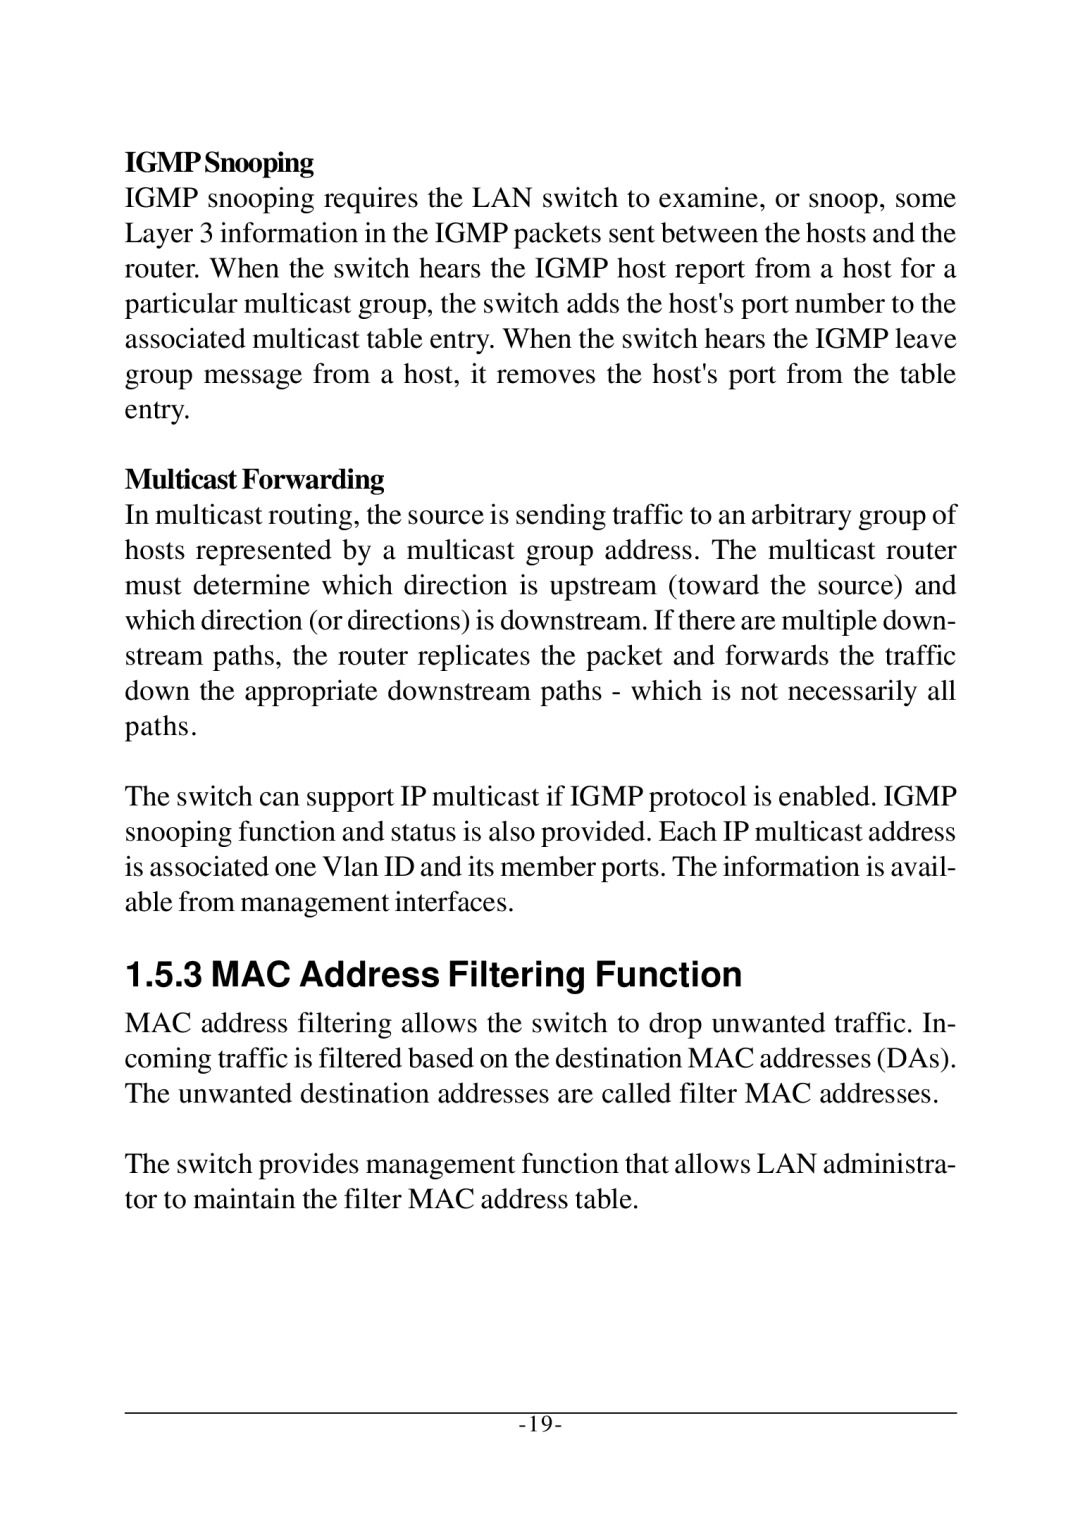 KTI Networks KS-2260 operation manual MAC Address Filtering Function, Igmp Snooping, Multicast Forwarding 